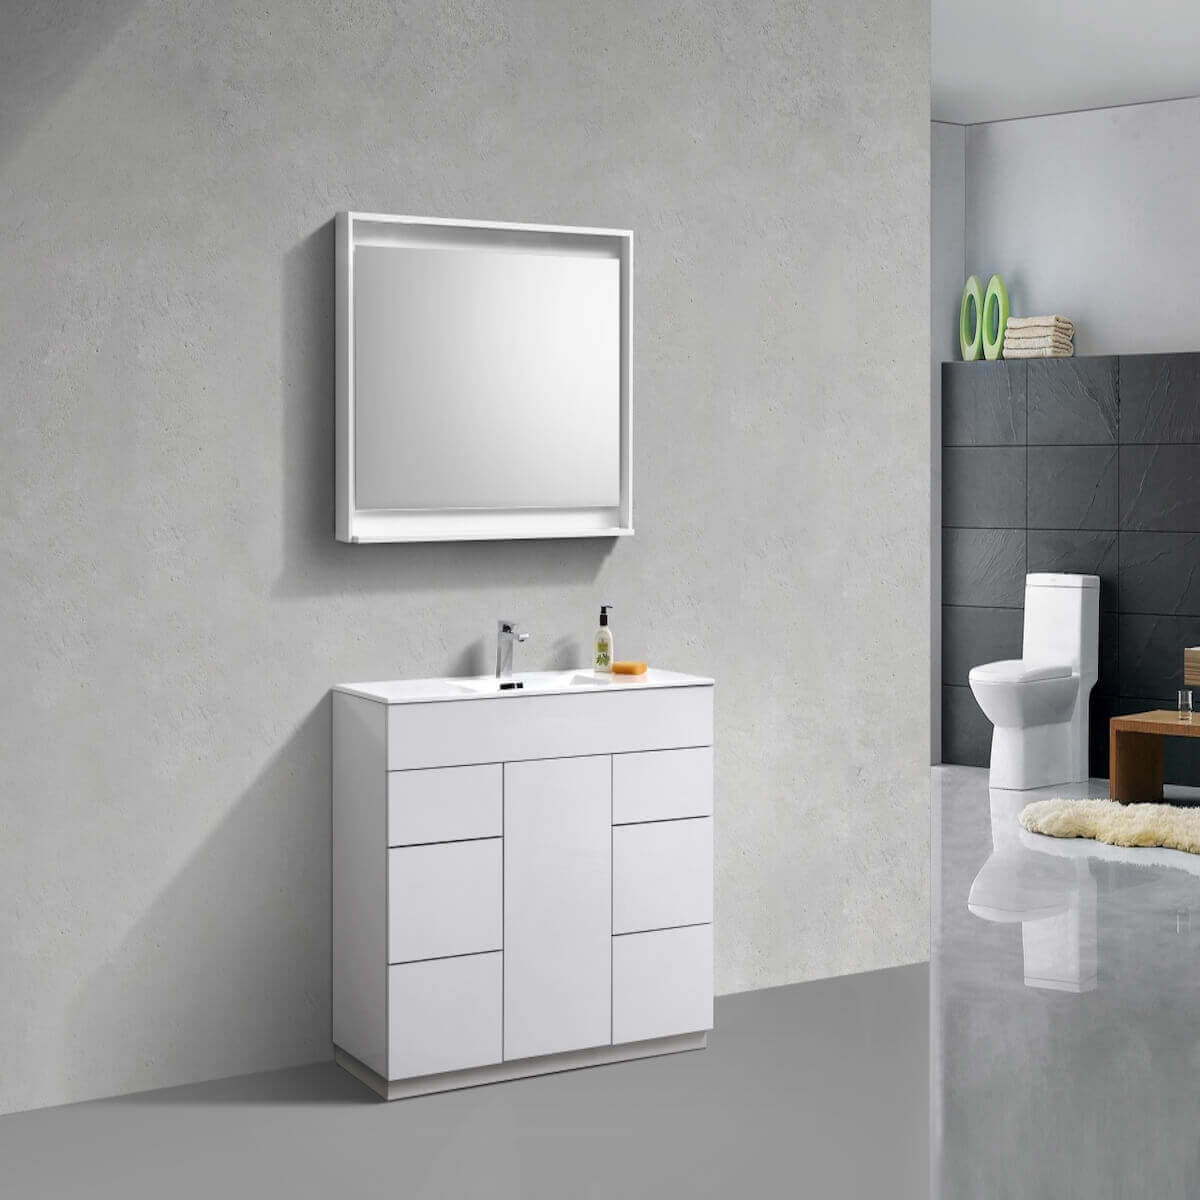 KubeBath Milano 48" Gloss White Floor Mount Single Vanity KFM48S-GW in Bathroom #finish_gloss white